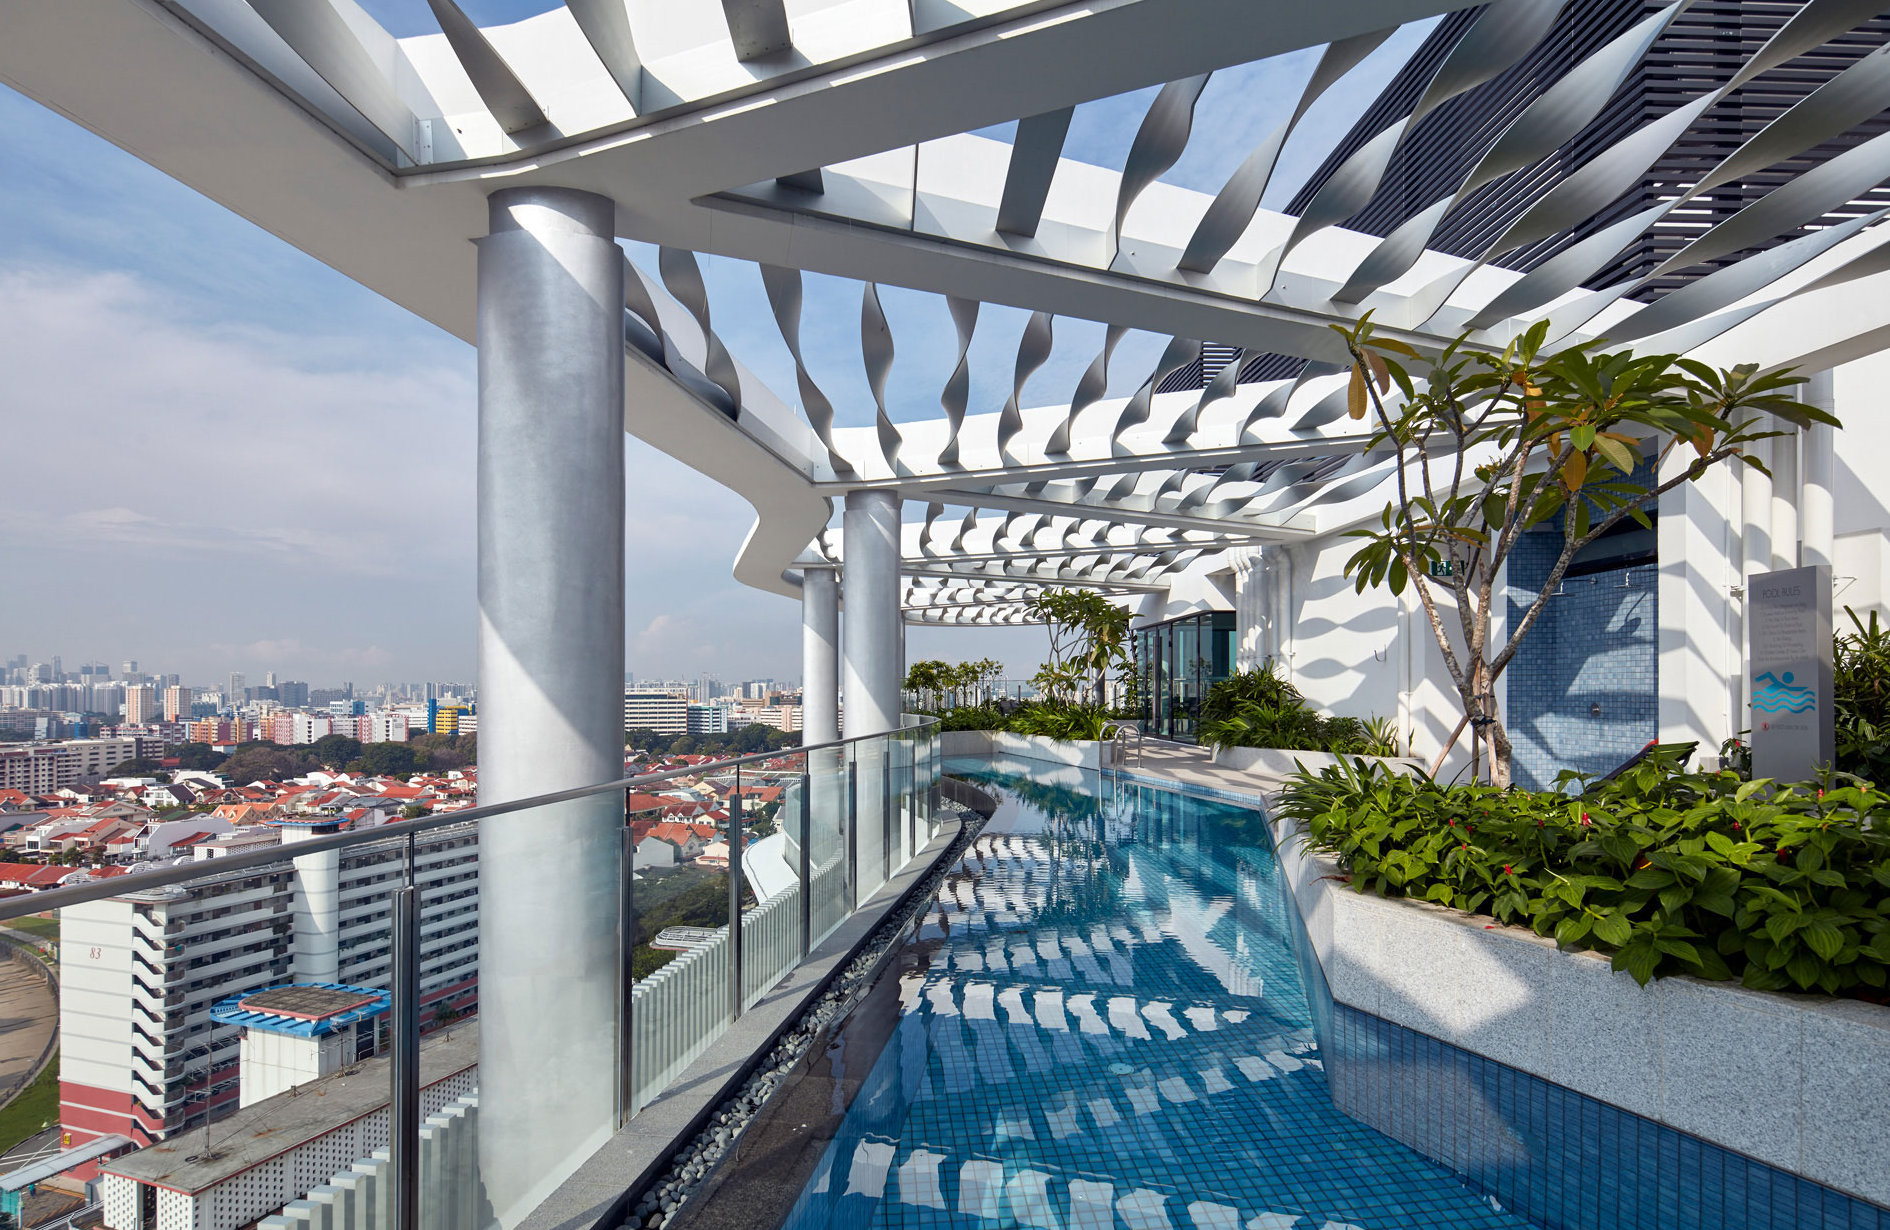 Condominium Roof Terrace by KSH Holdings